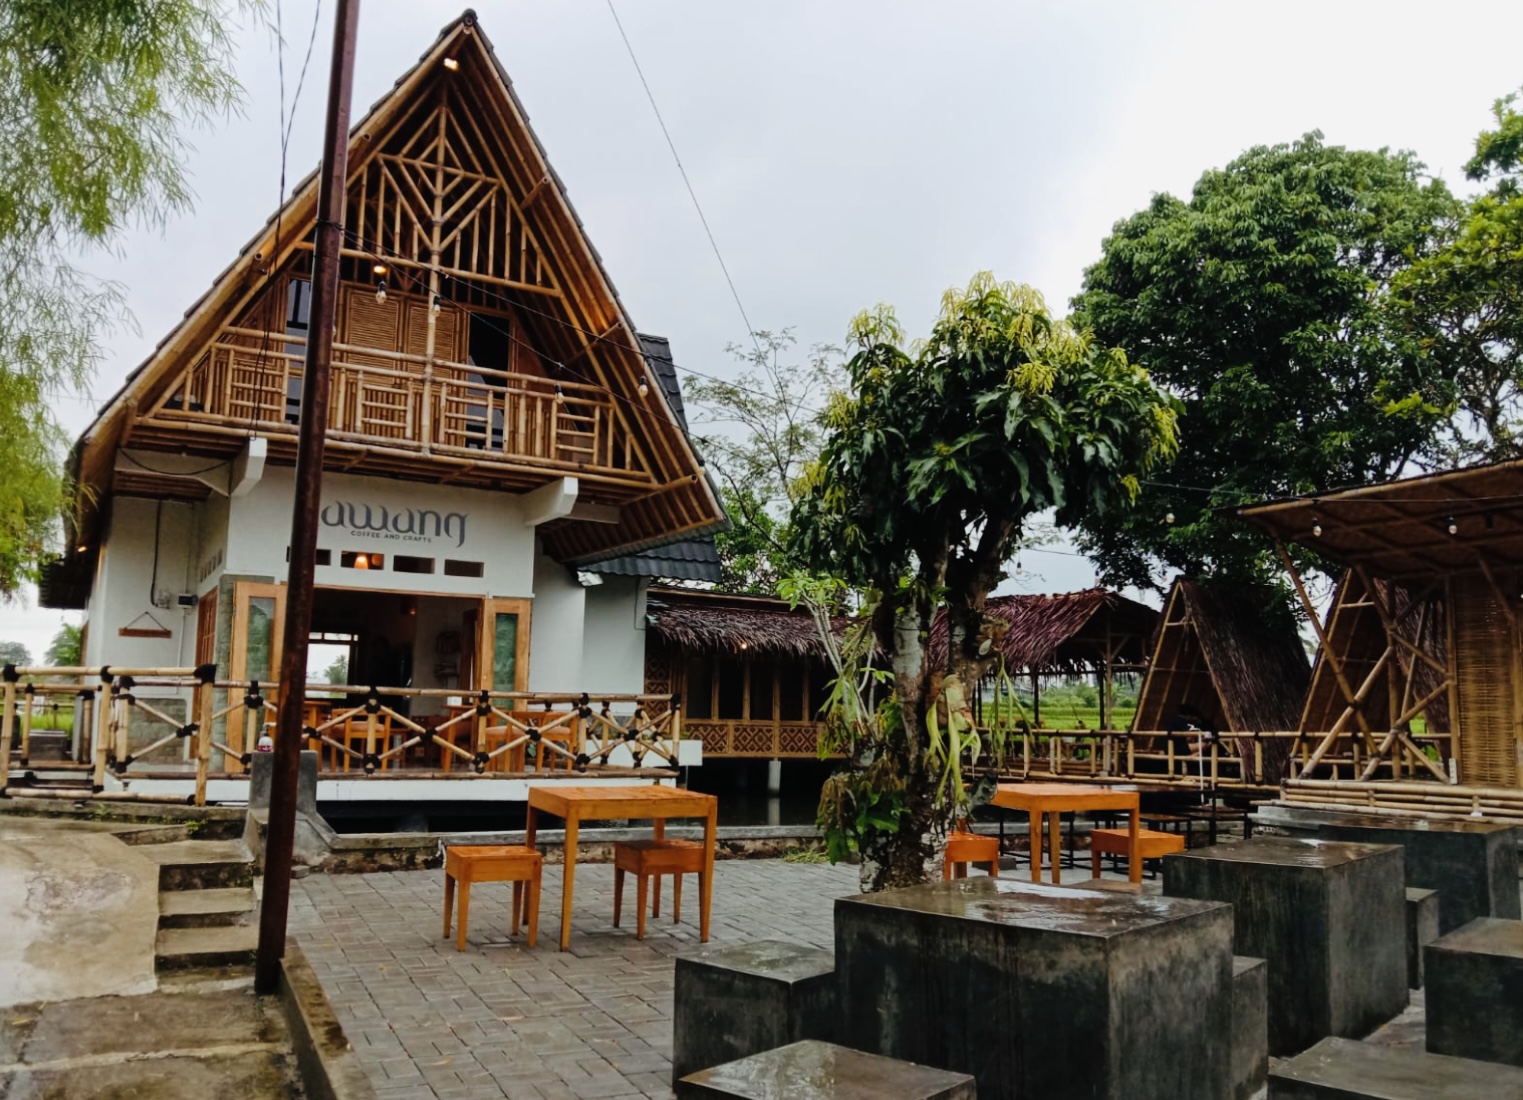 Nikmati Hijaunya Pesawahan dan BCL Kopi Tasikmalaya di Lawang Cafe, Cocok untuk Tempat Healing di Akhir Pekan